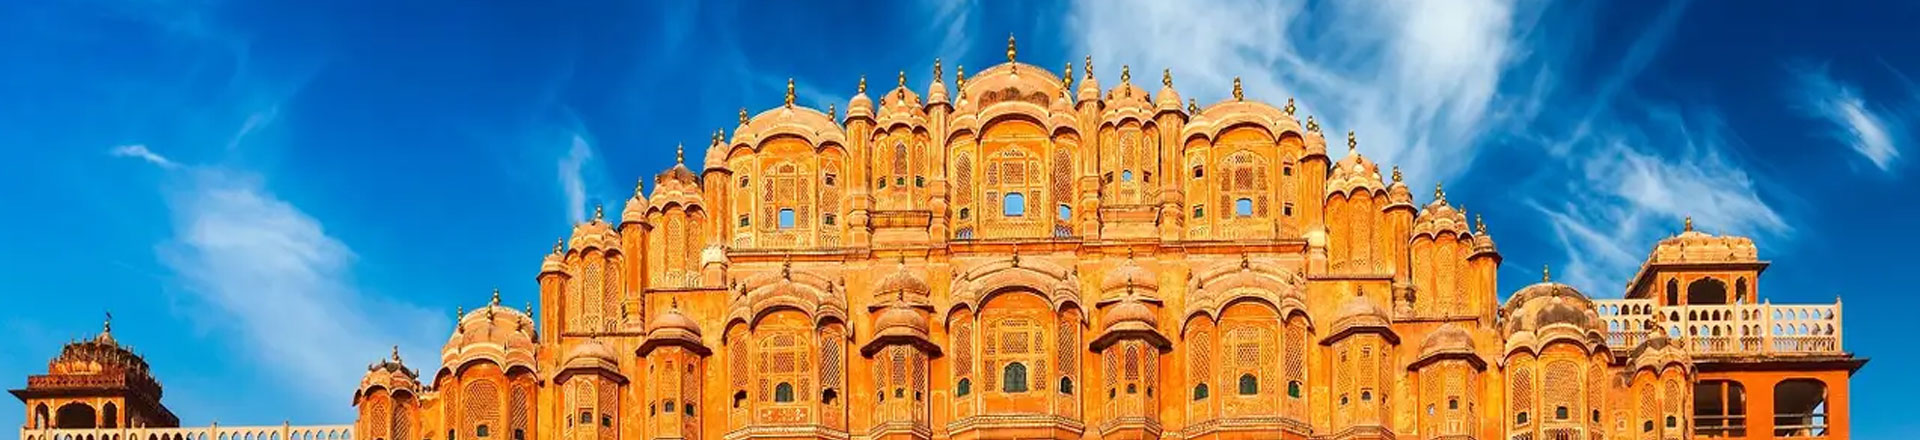 7 Days Delhi Agra Jaipur Tour Packages